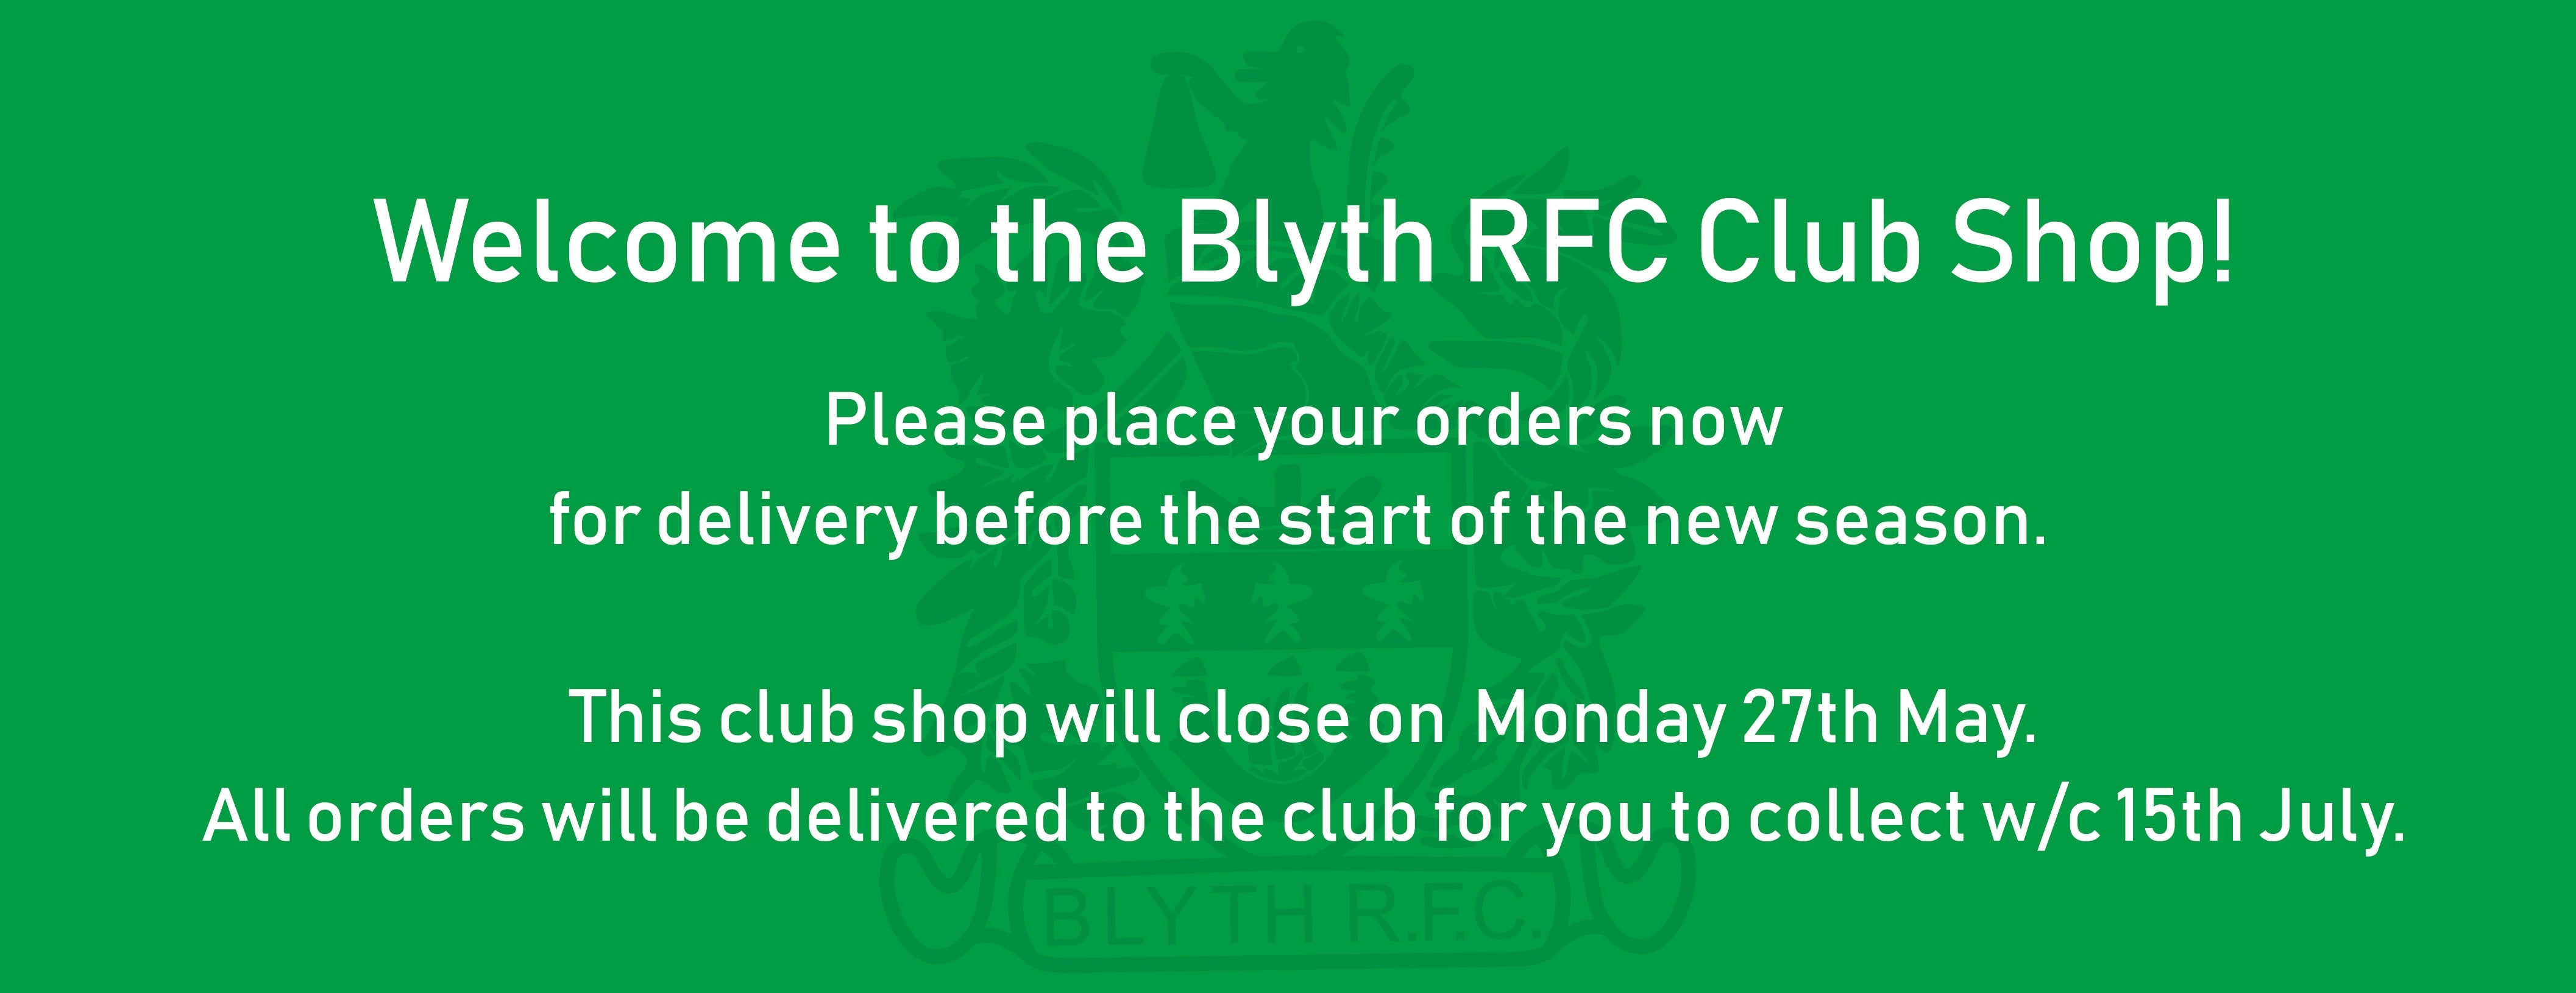 Blyth RFC Club Shop